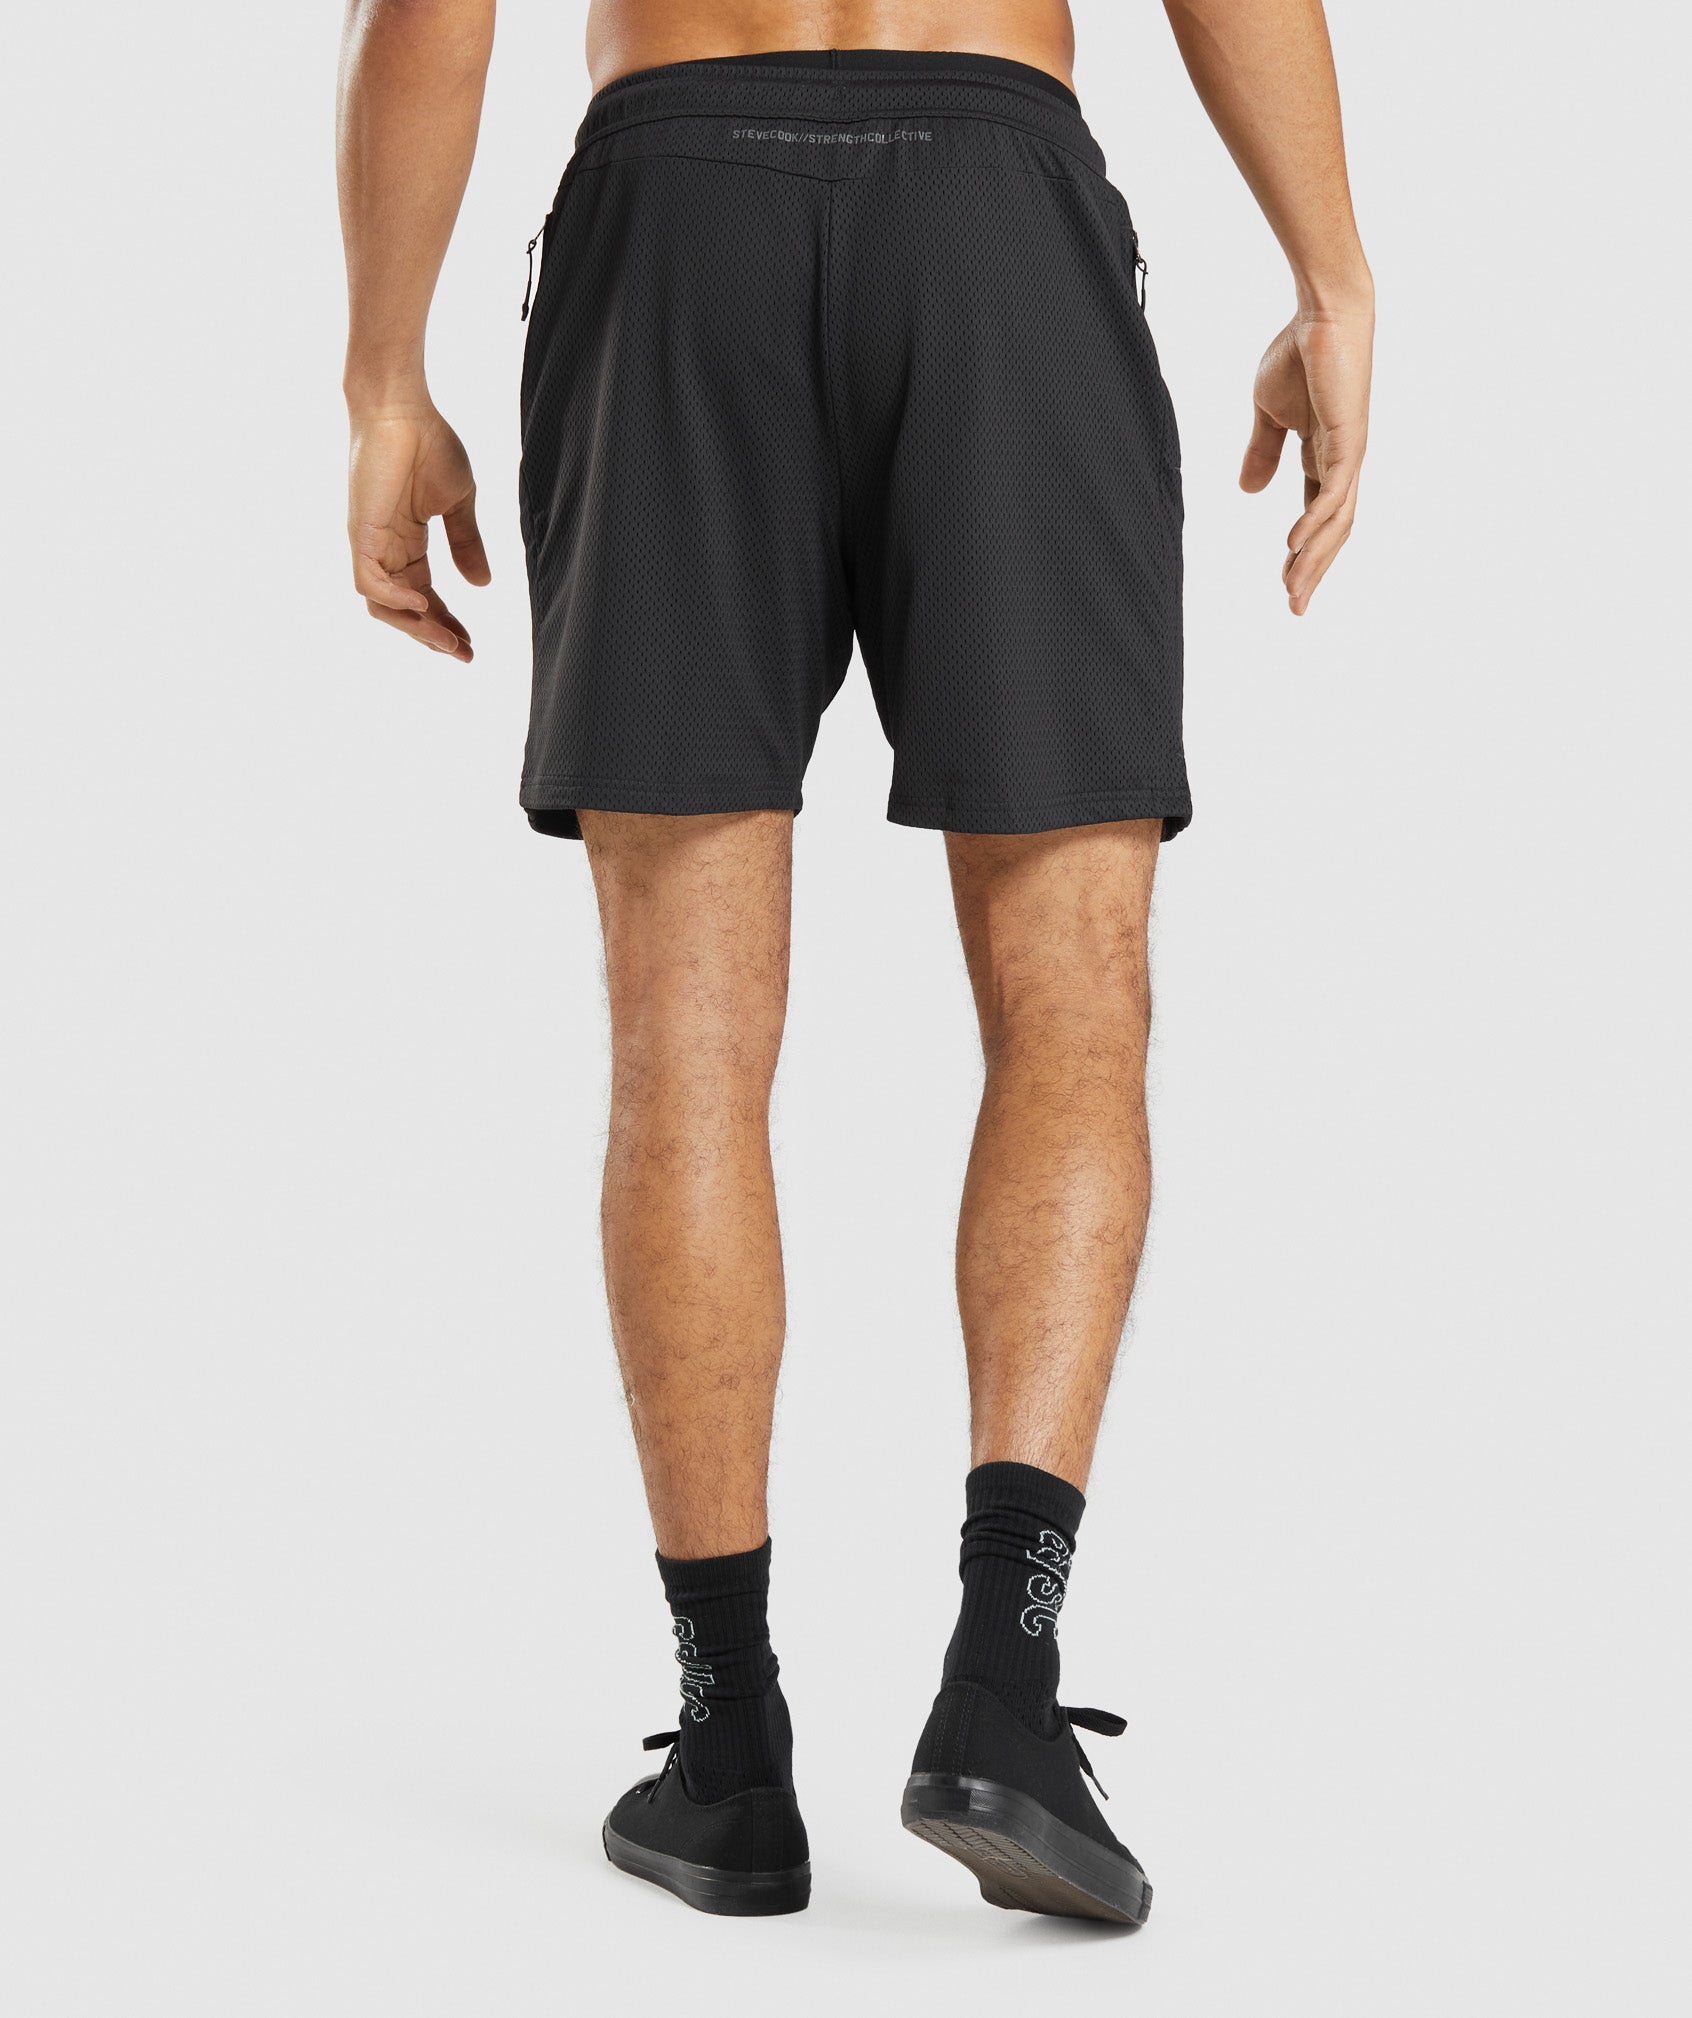 Gymshark//Steve Cook Mesh Shorts in Black - view 2